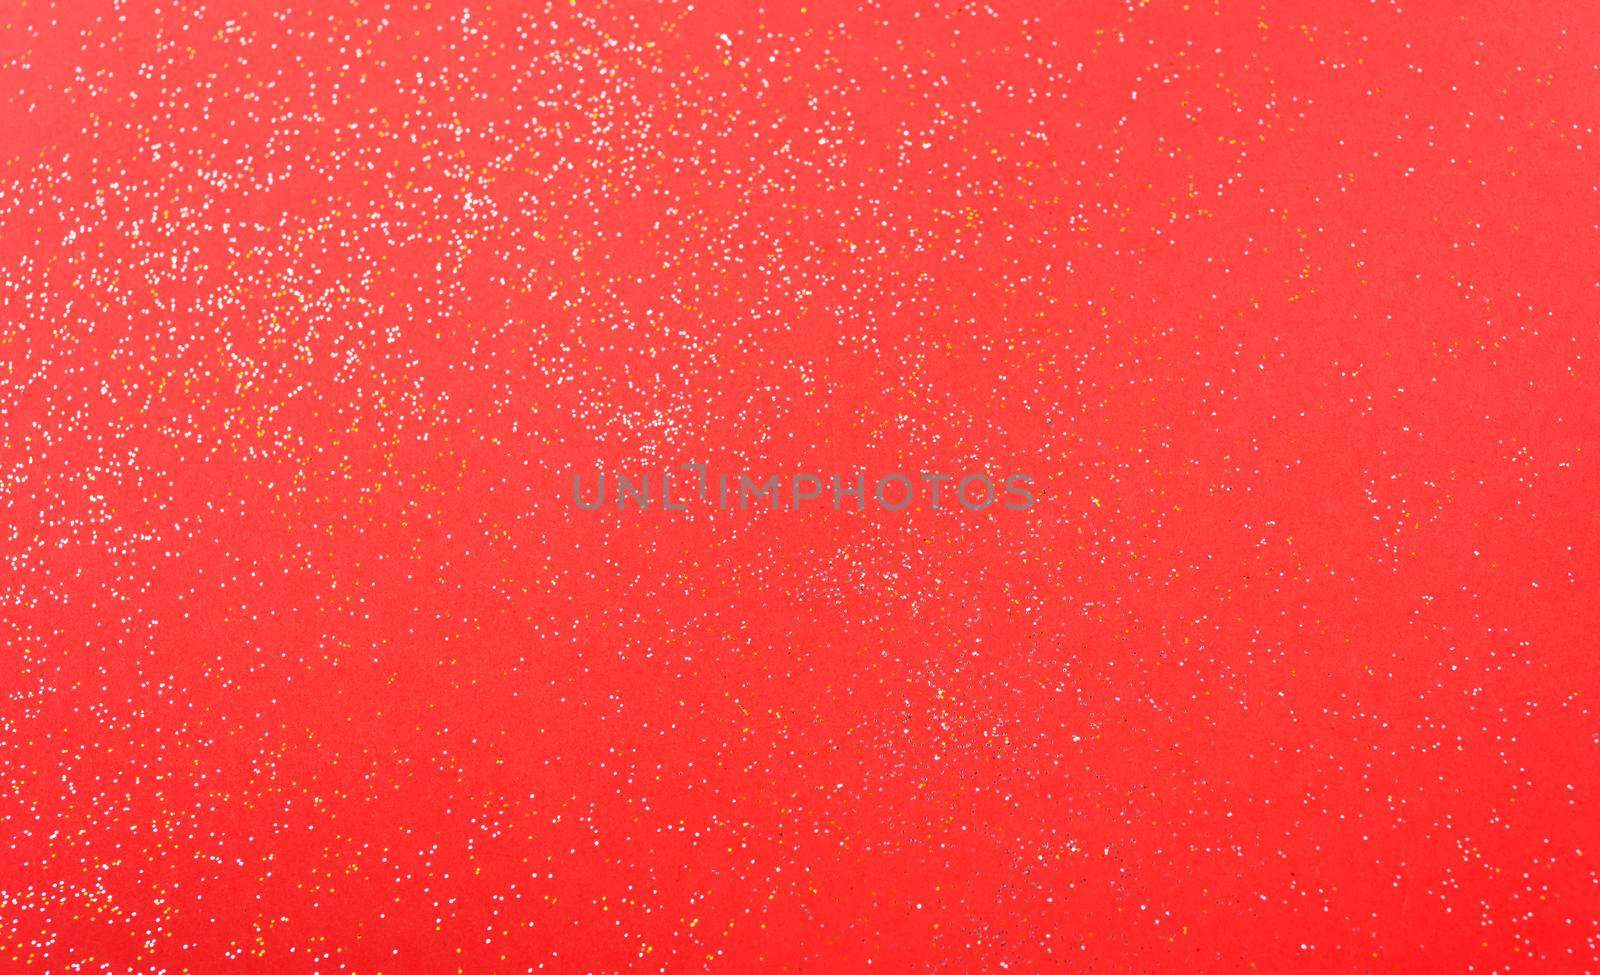 Shiny particles glitter by Sorapop